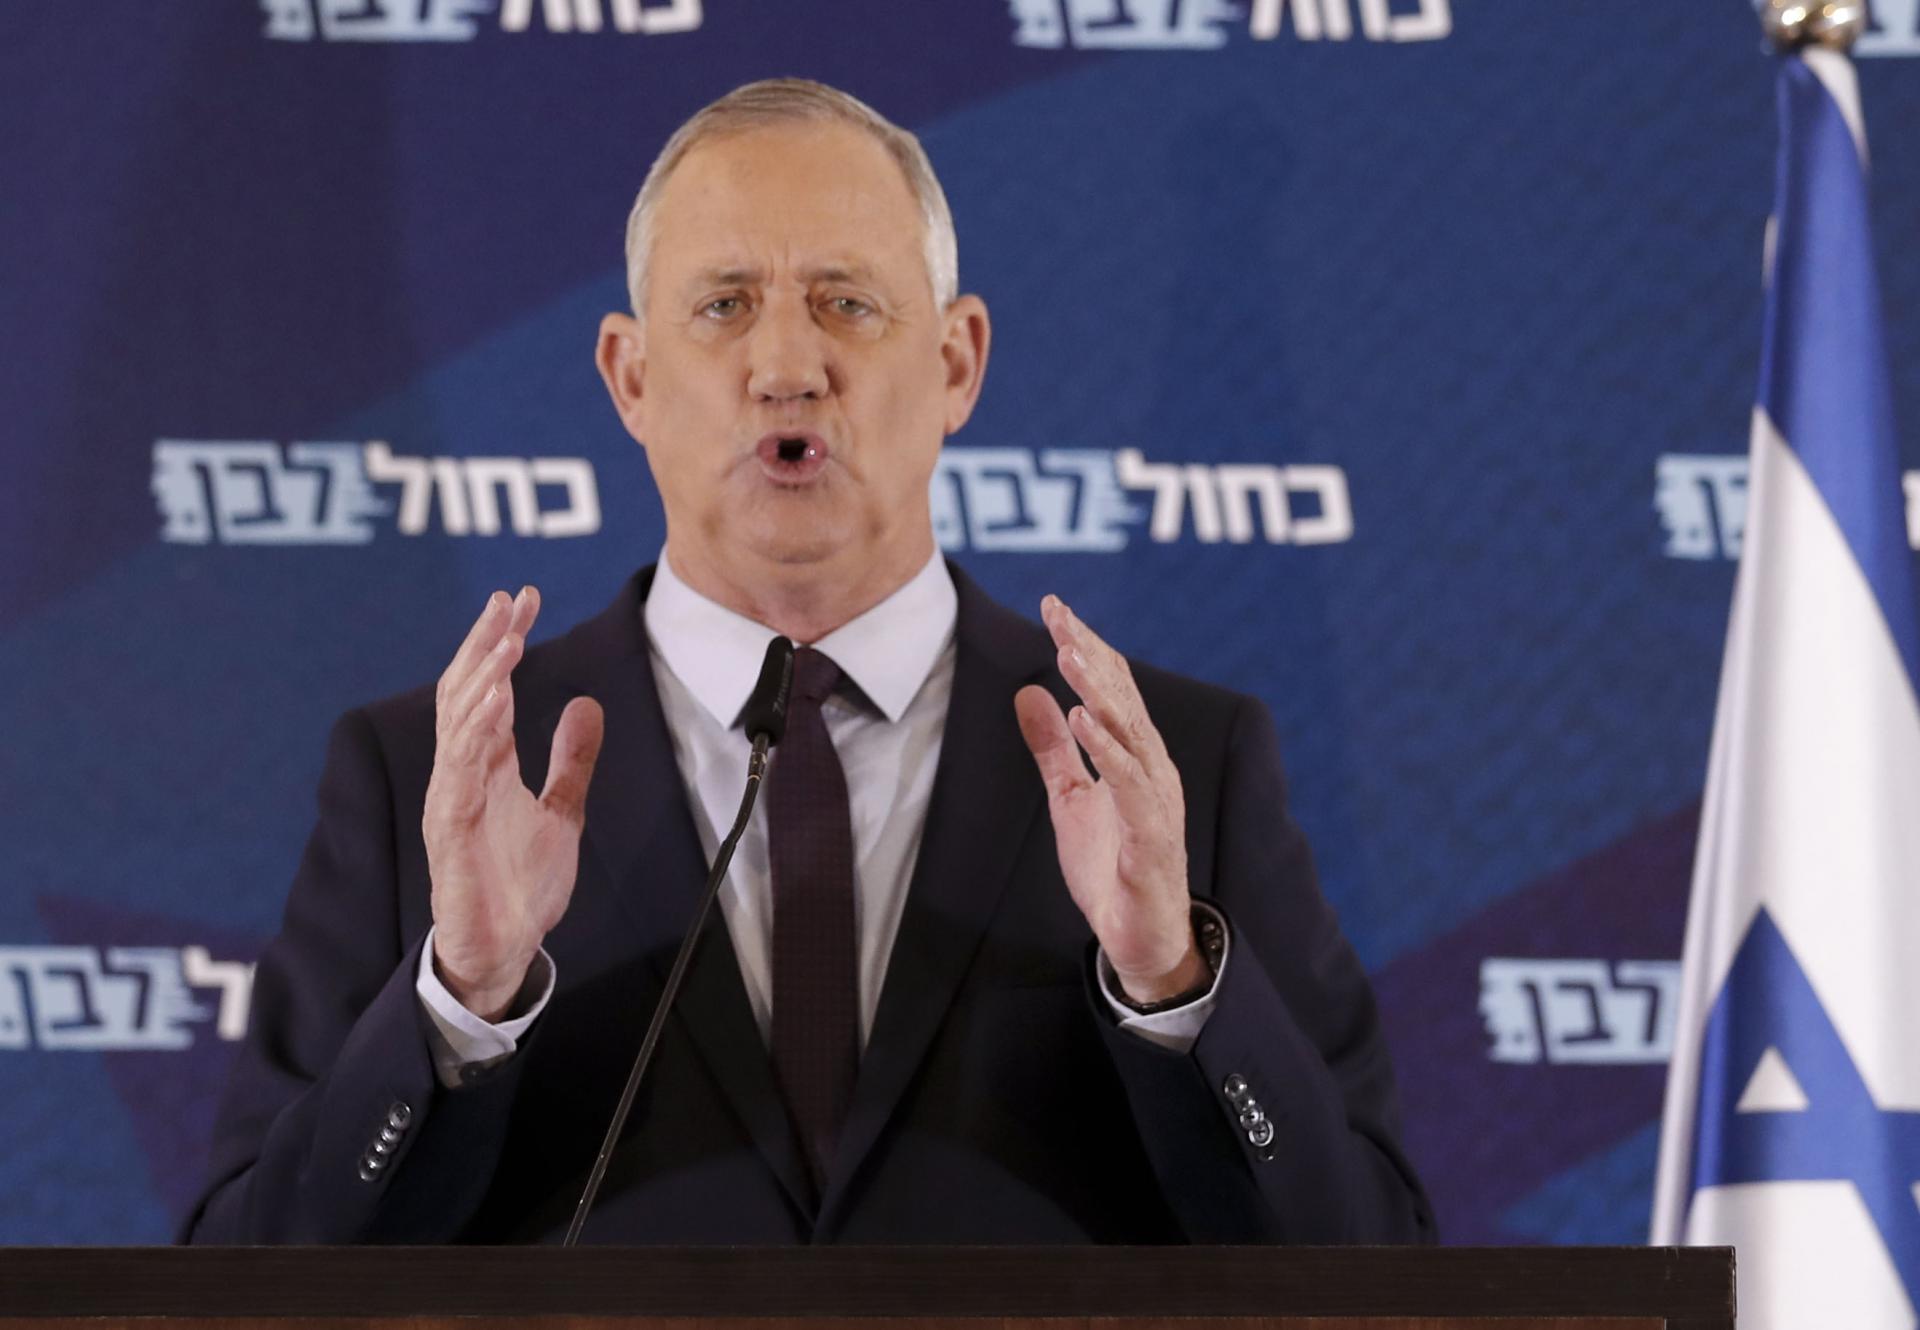 Newly elected Israeli parliament speaker Benny Gantz